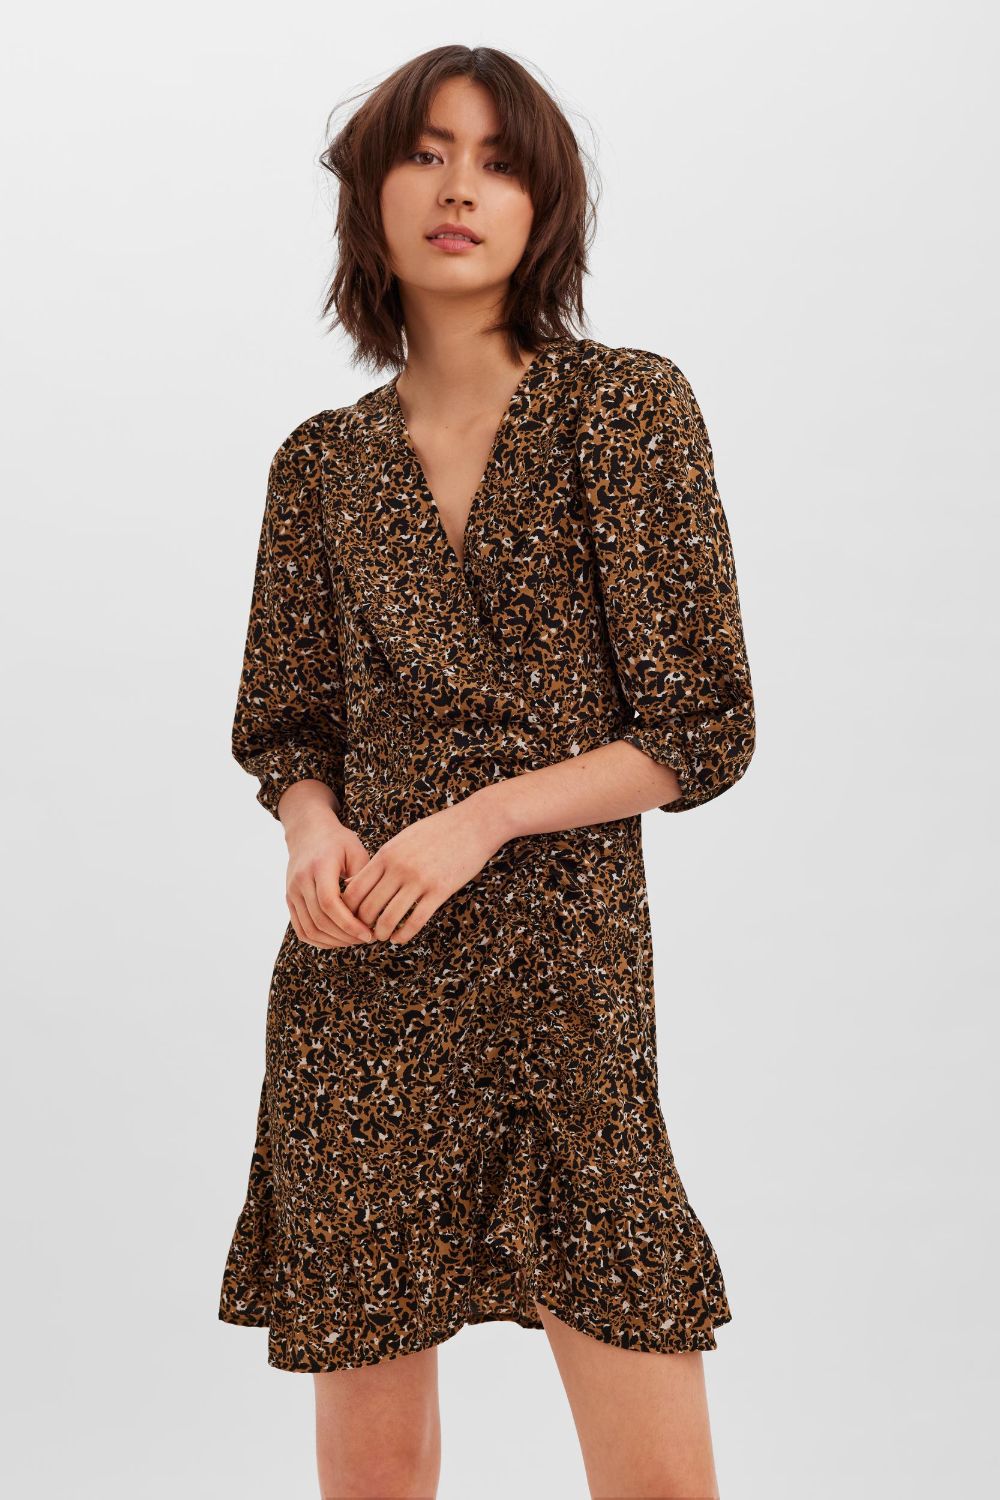 Vero Moda Olga Long Sleeve Animal Print Wrap Dress in Brown | iCLOTHING -  iCLOTHING